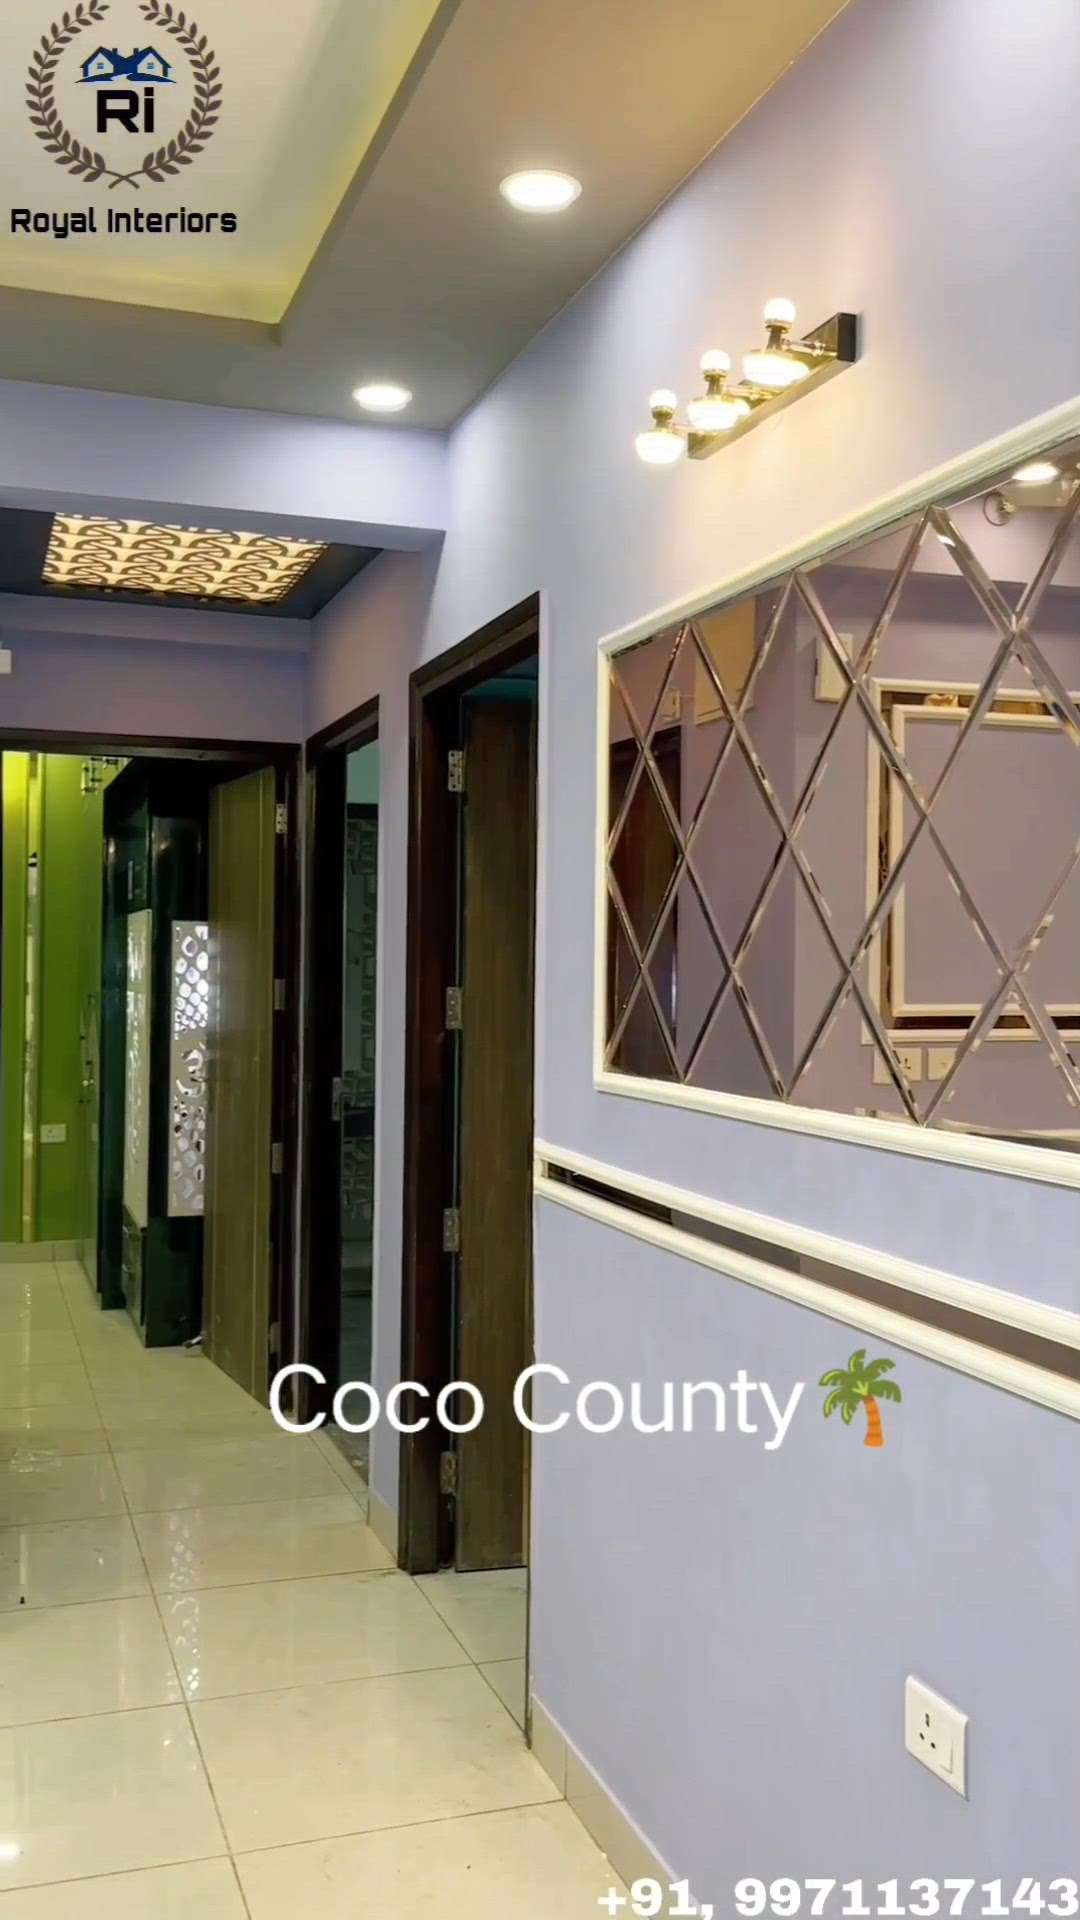 Coco County Complete interior Finished #trendingdesign #InteriorDesigner #LivingroomDesigns